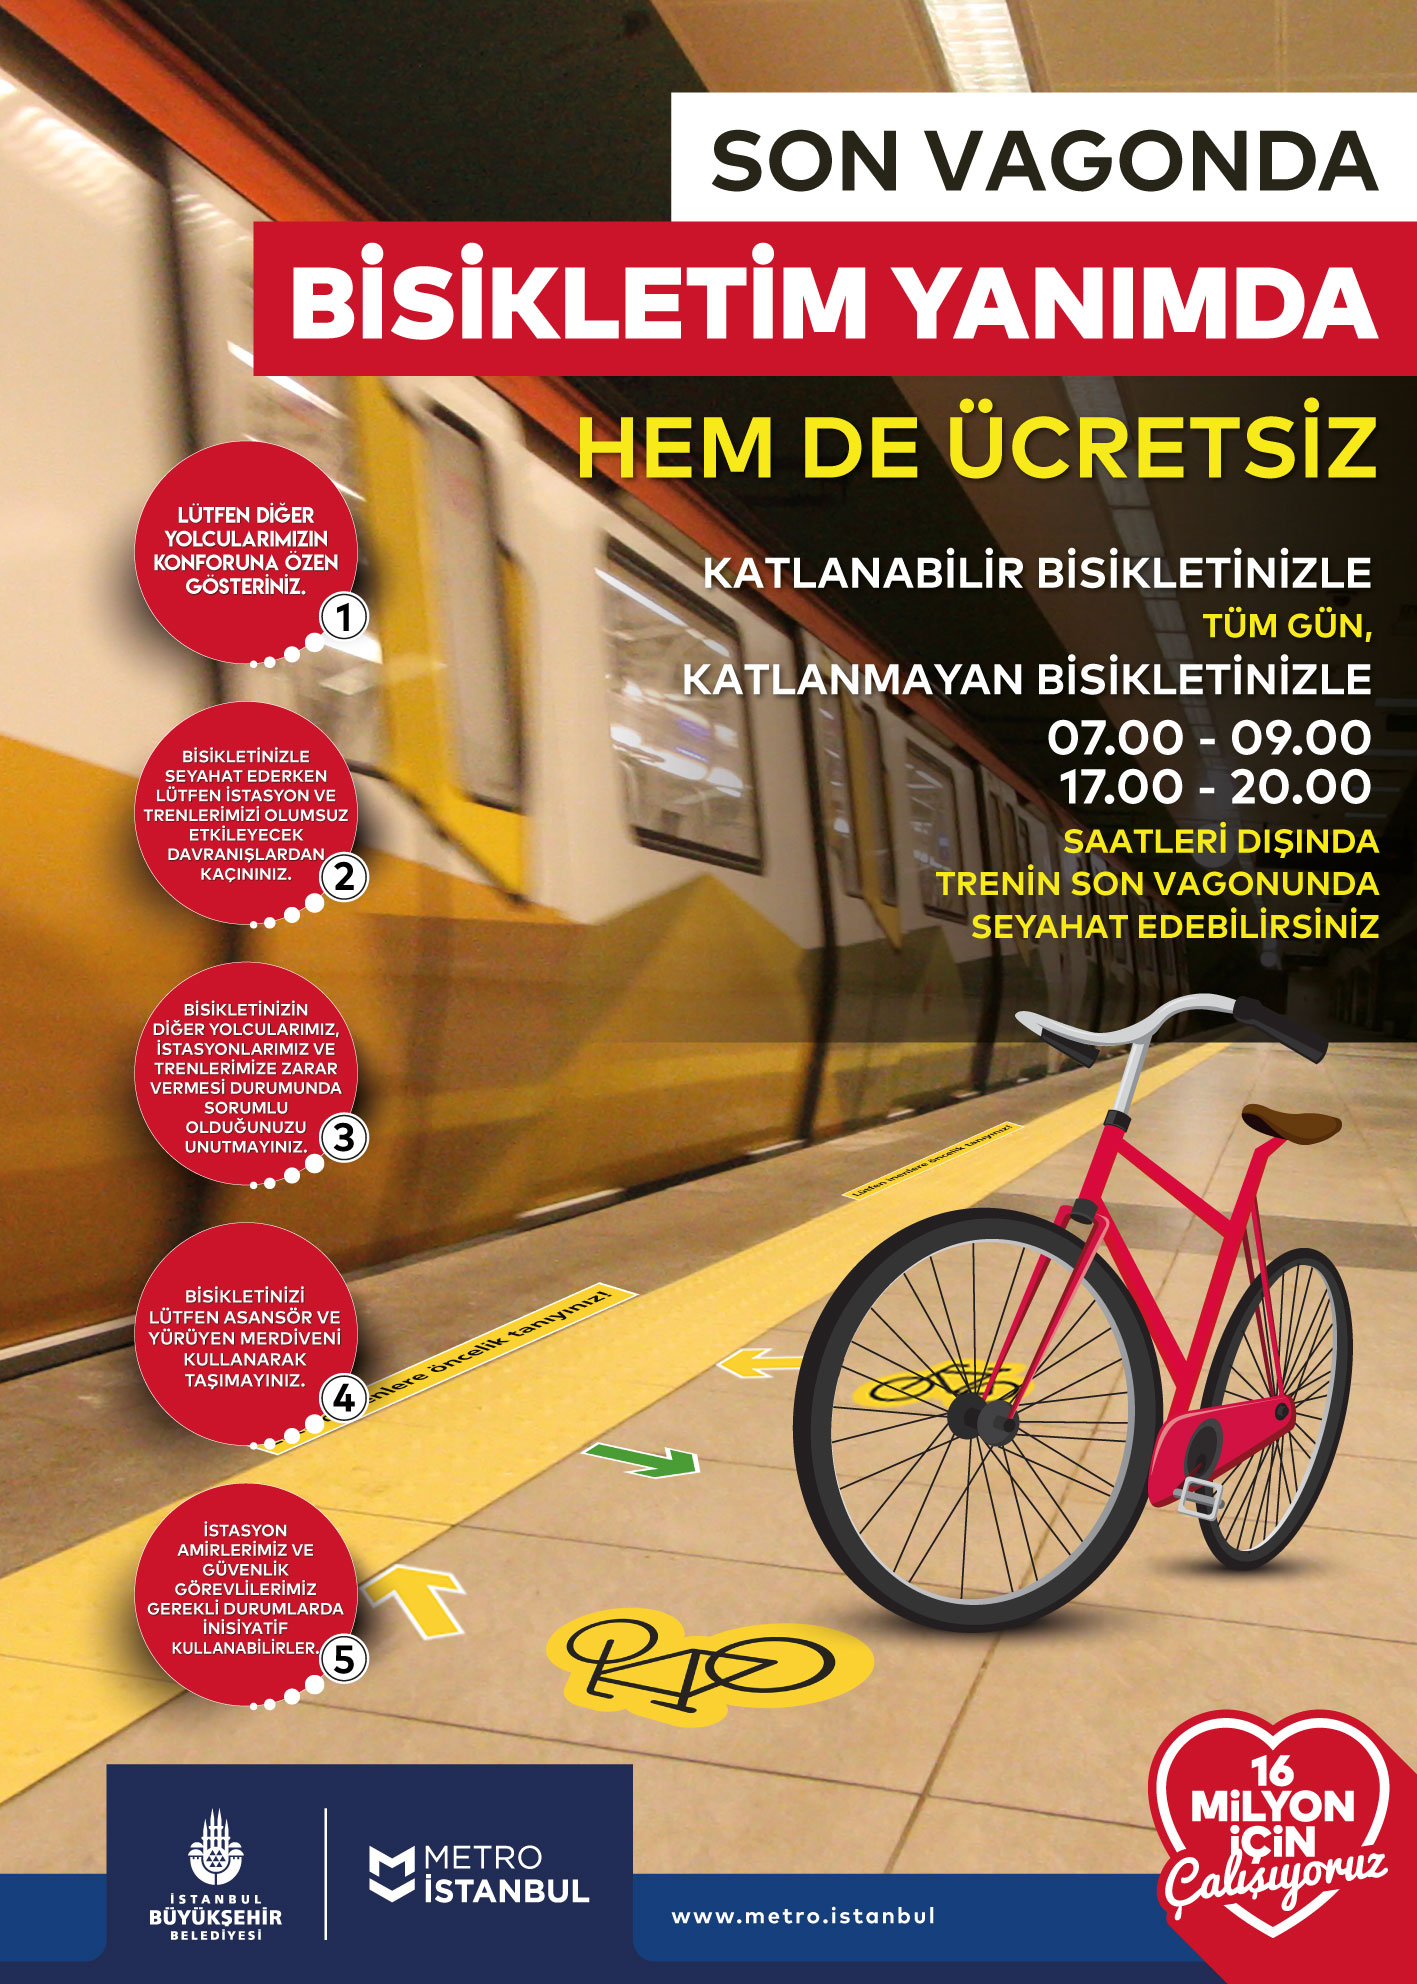 Metro İstanbul'da Bisikletlilere Özel Vagon